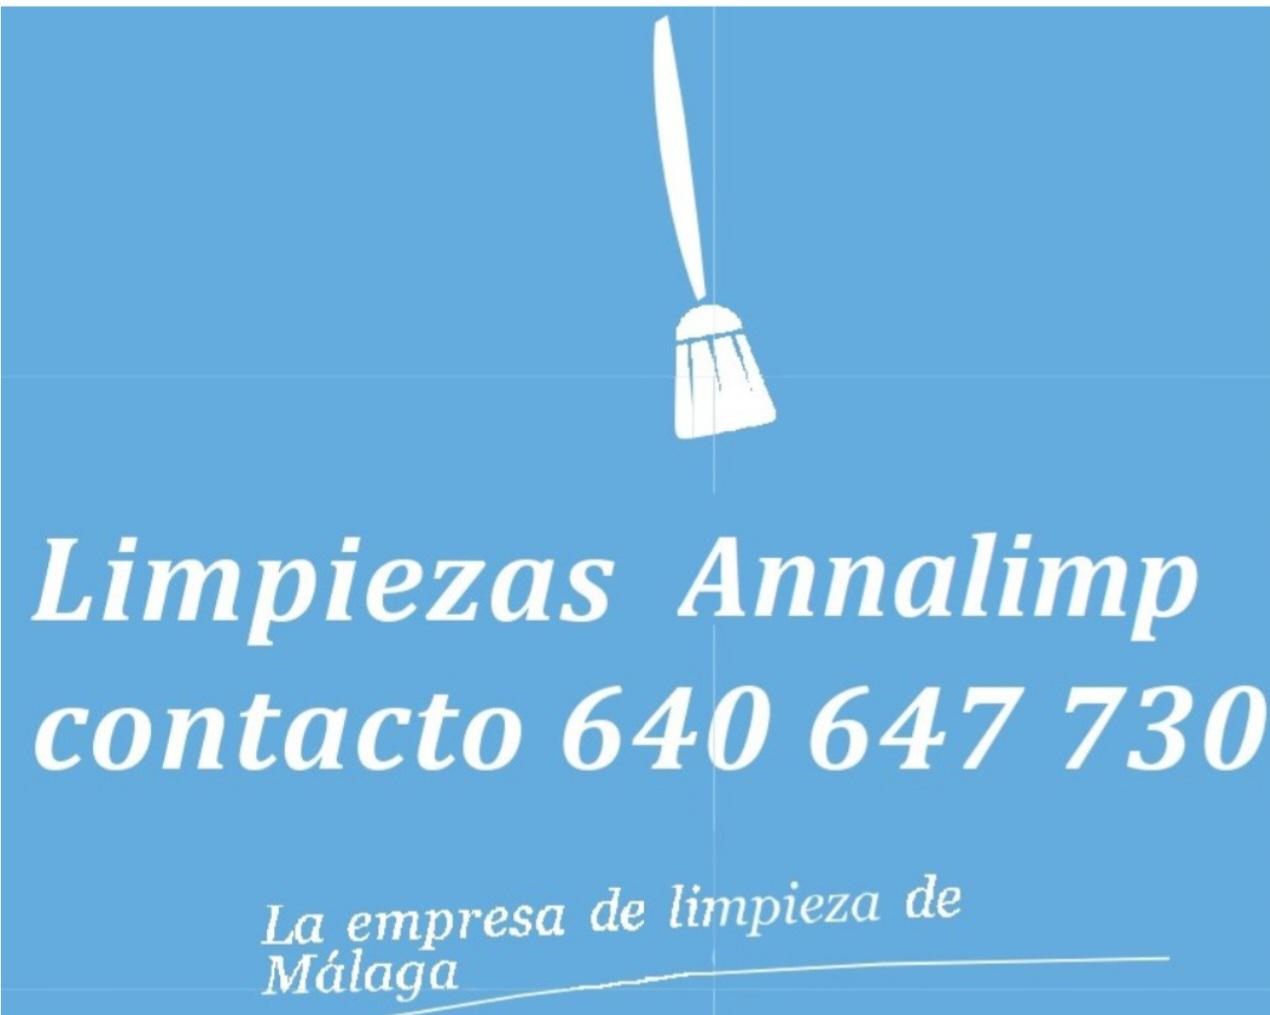 Limpiezas Annalimp Málaga